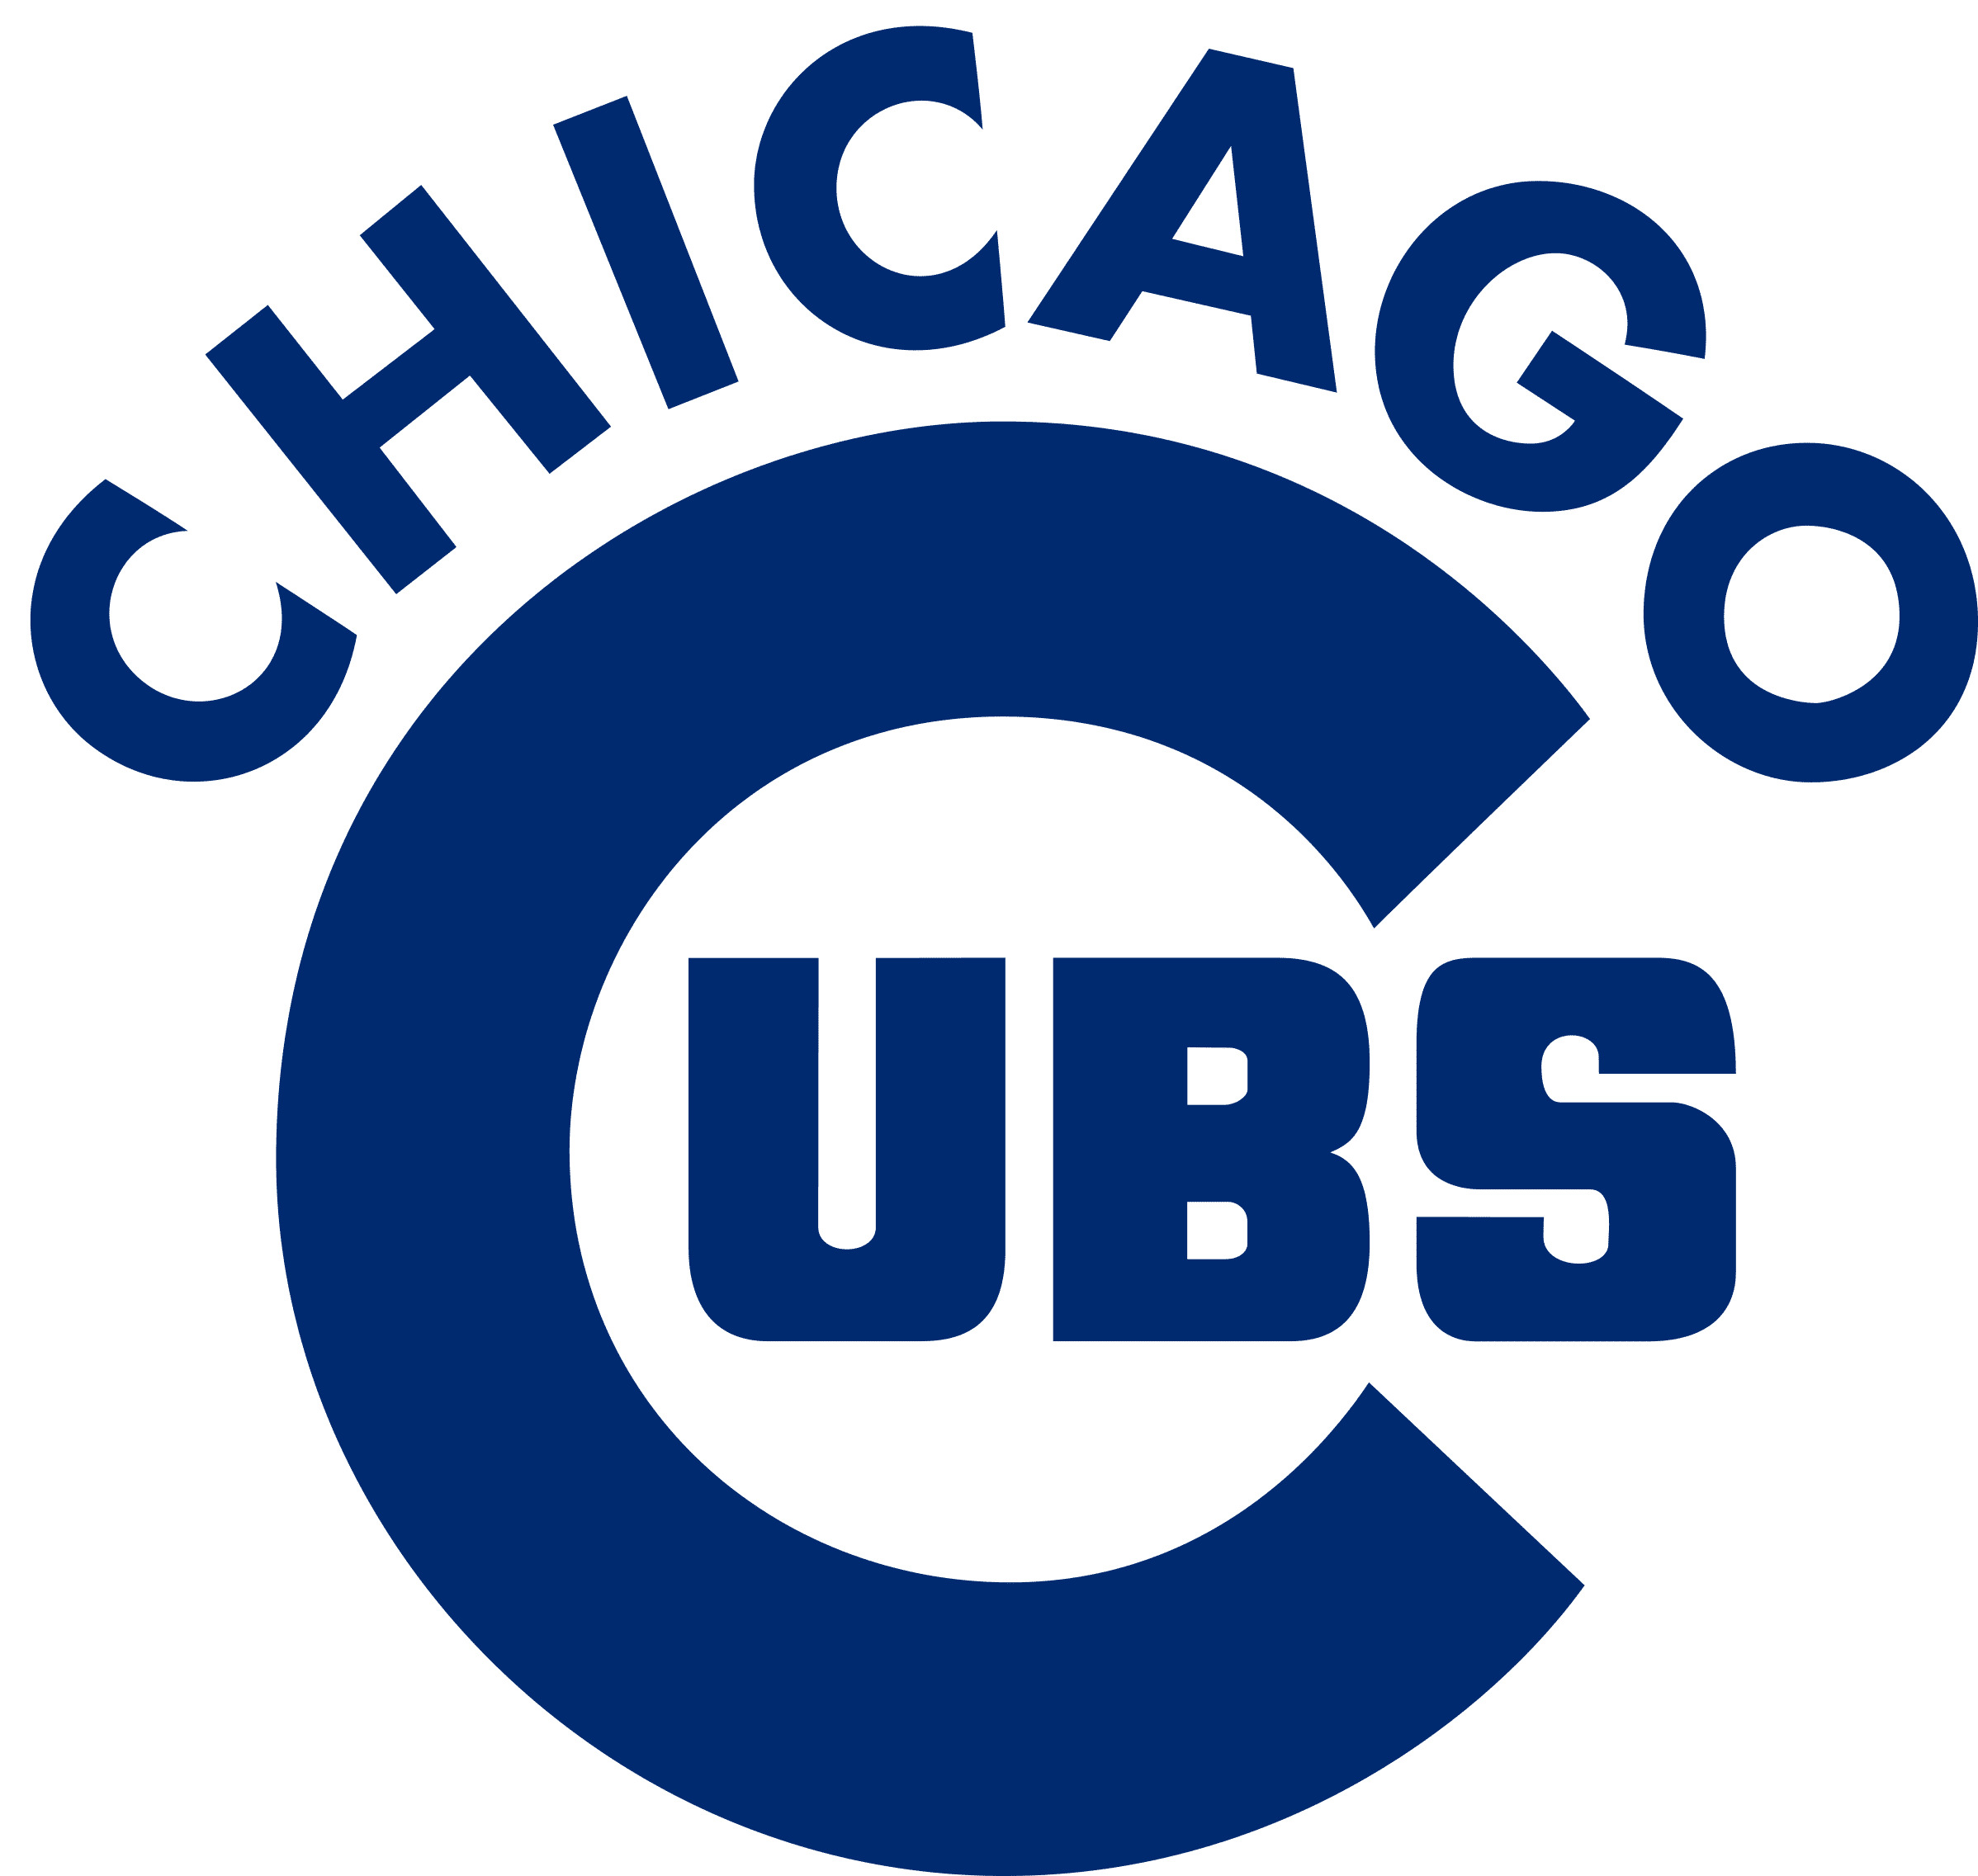 Chicago Cubs logo SVG Cut Files - vector svg format